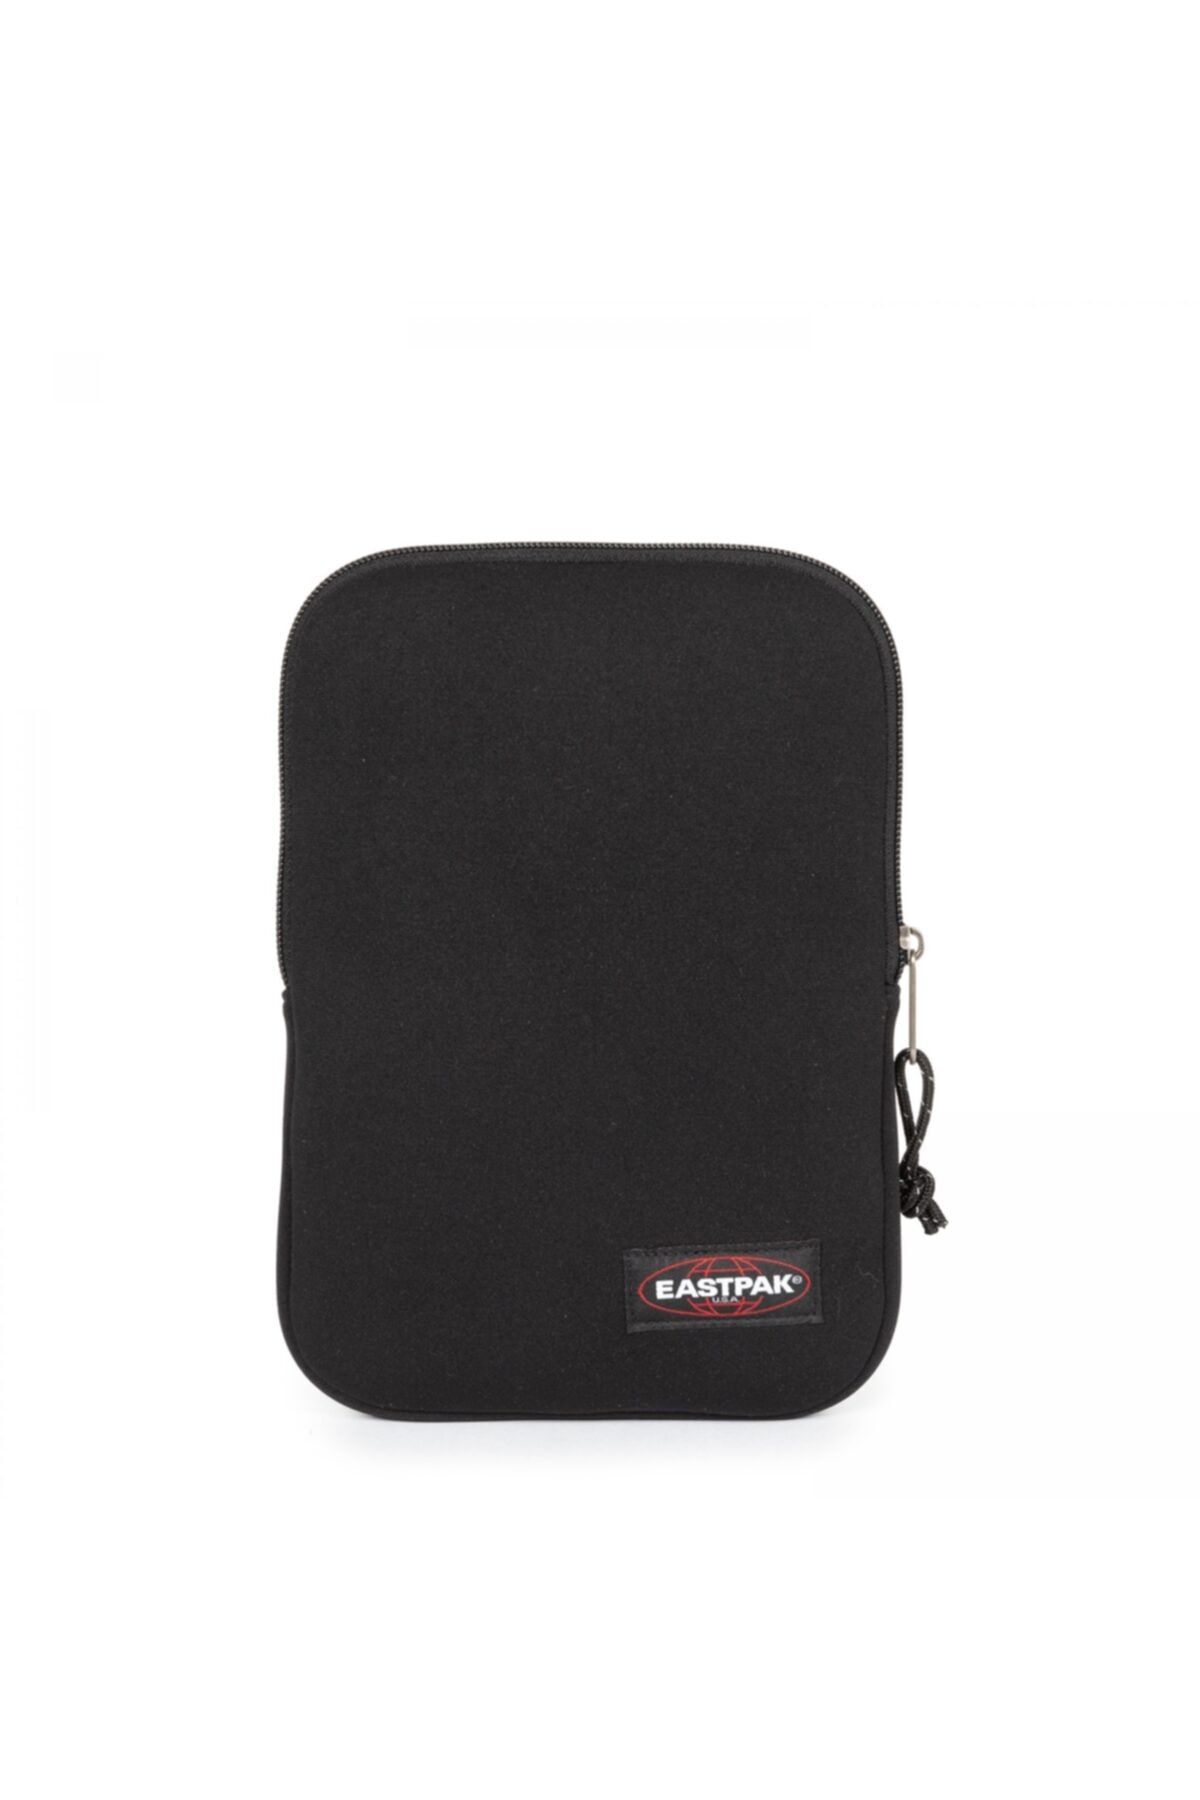 Eastpak Blanket Unisex Siyah Laptop Çantası Ek0a5b910081